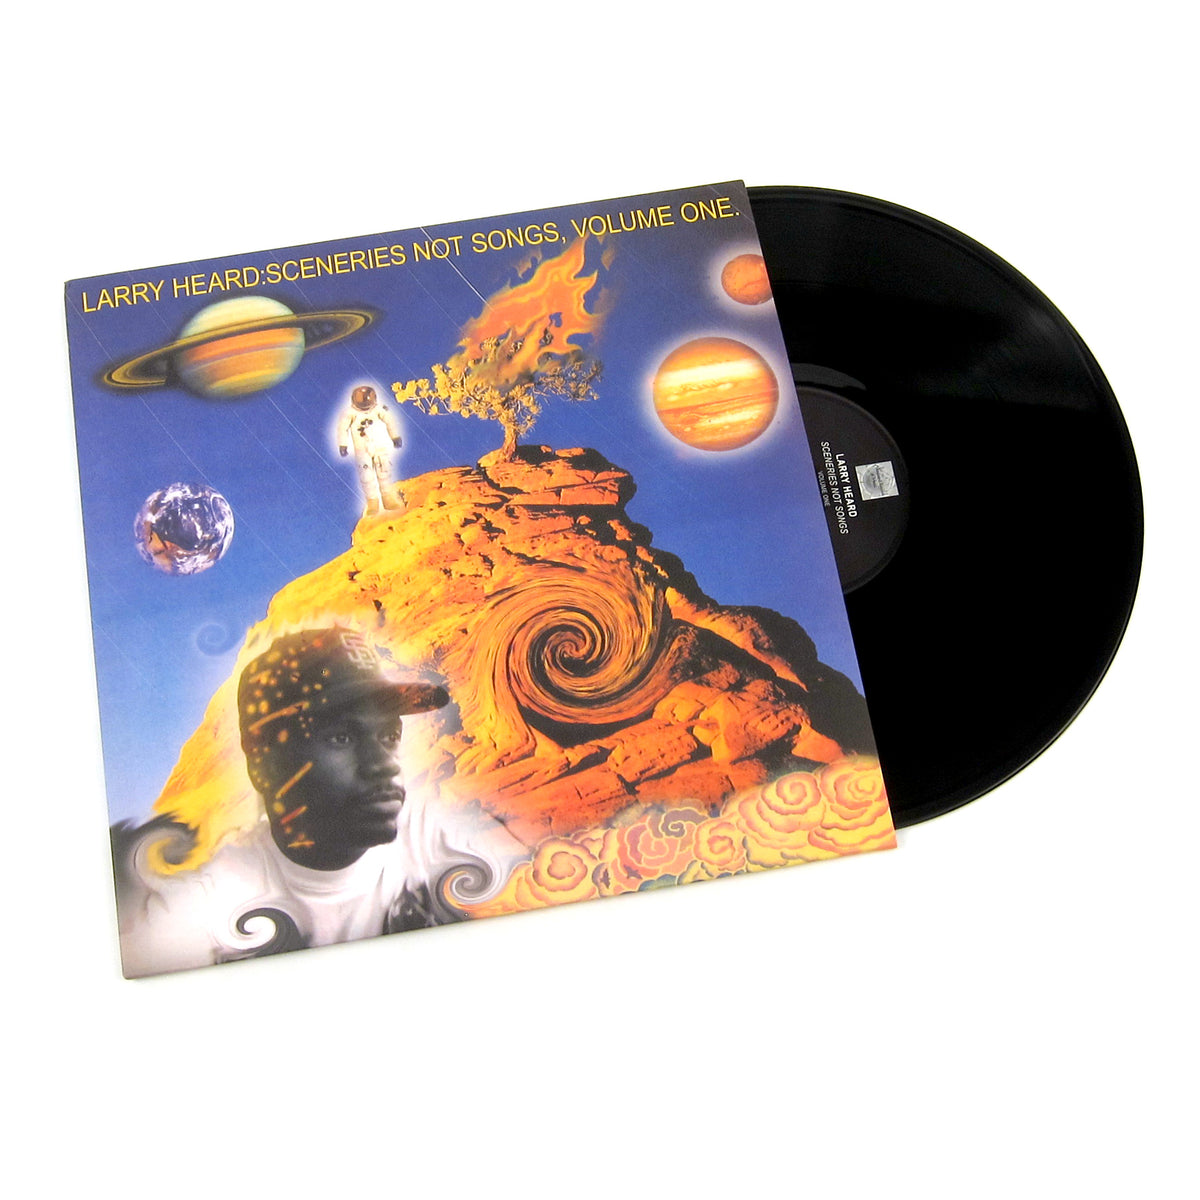 Larry Heard: Sceneries Not Songs Volume One (Mr. Fingers) Vinyl 2LP